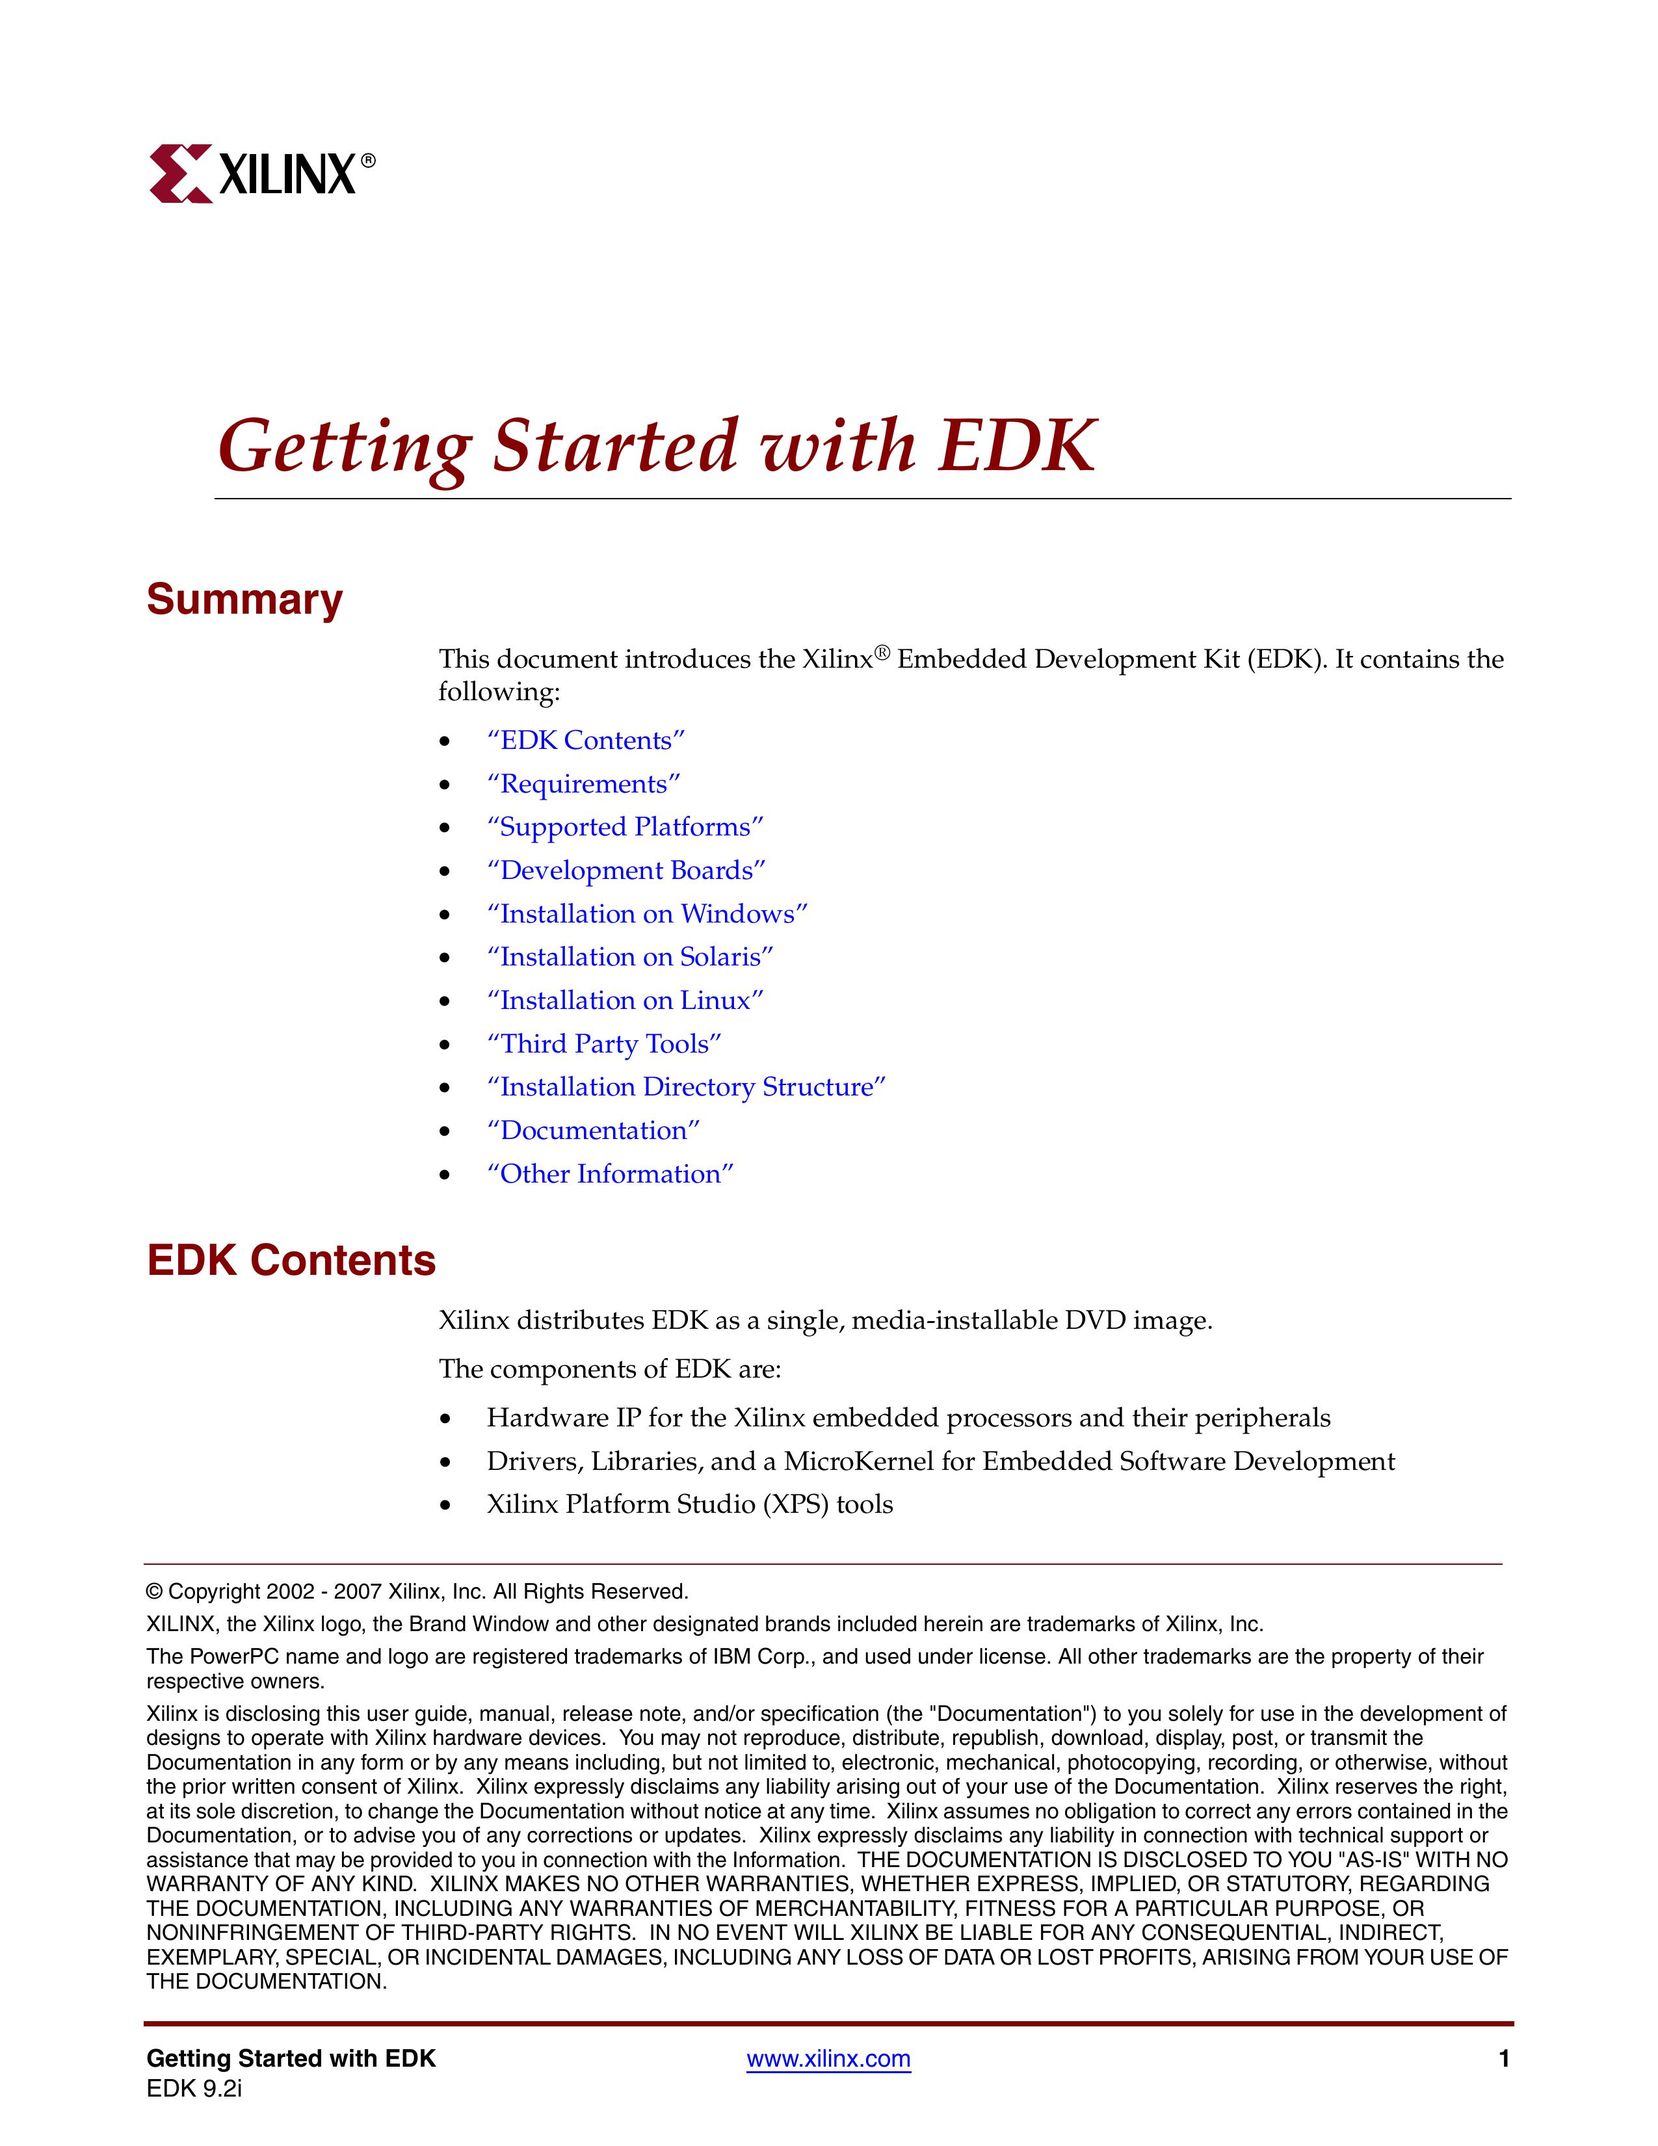 Xilinx EDK 9.2I Computer Hardware User Manual